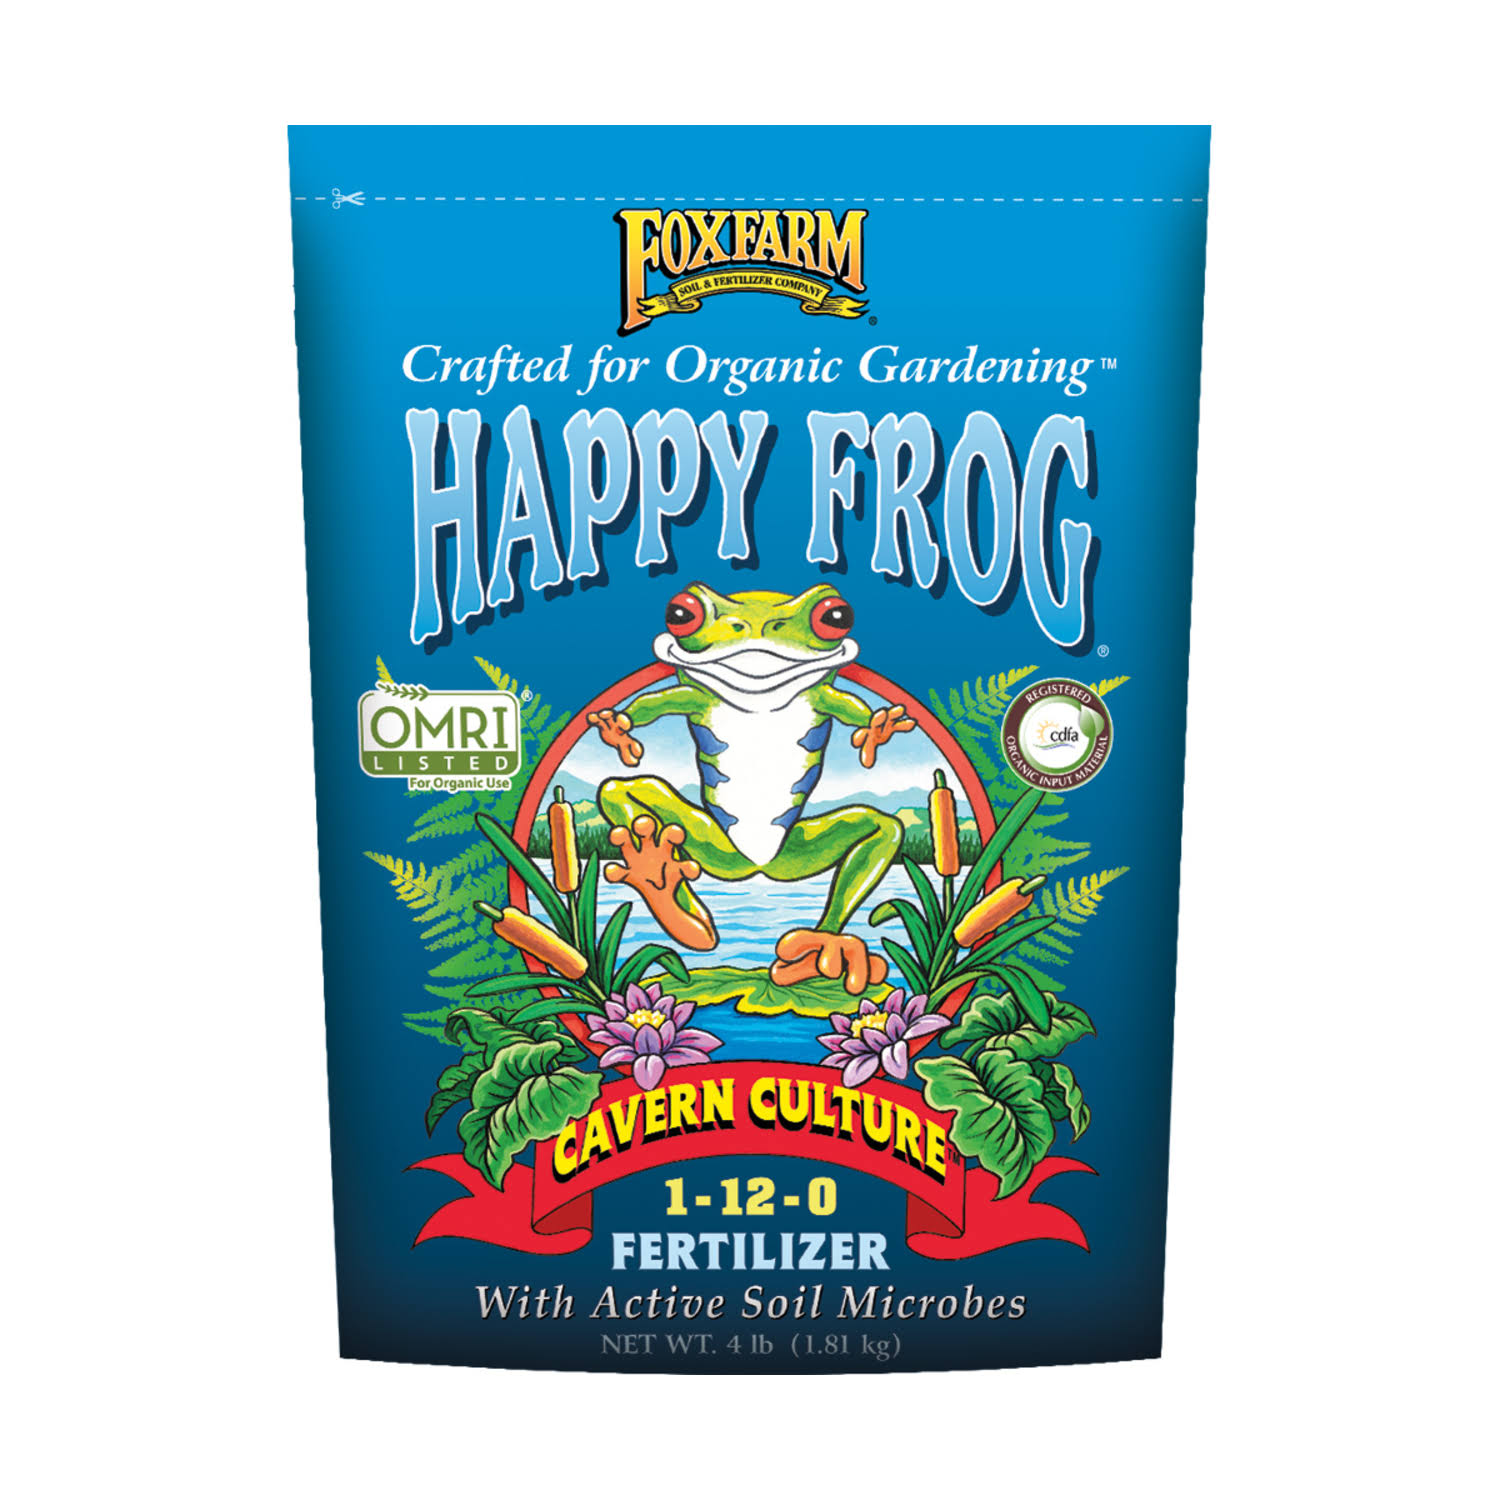 FoxFarm Happy Frog Cavern Culture Fertilizer - 4 Pound